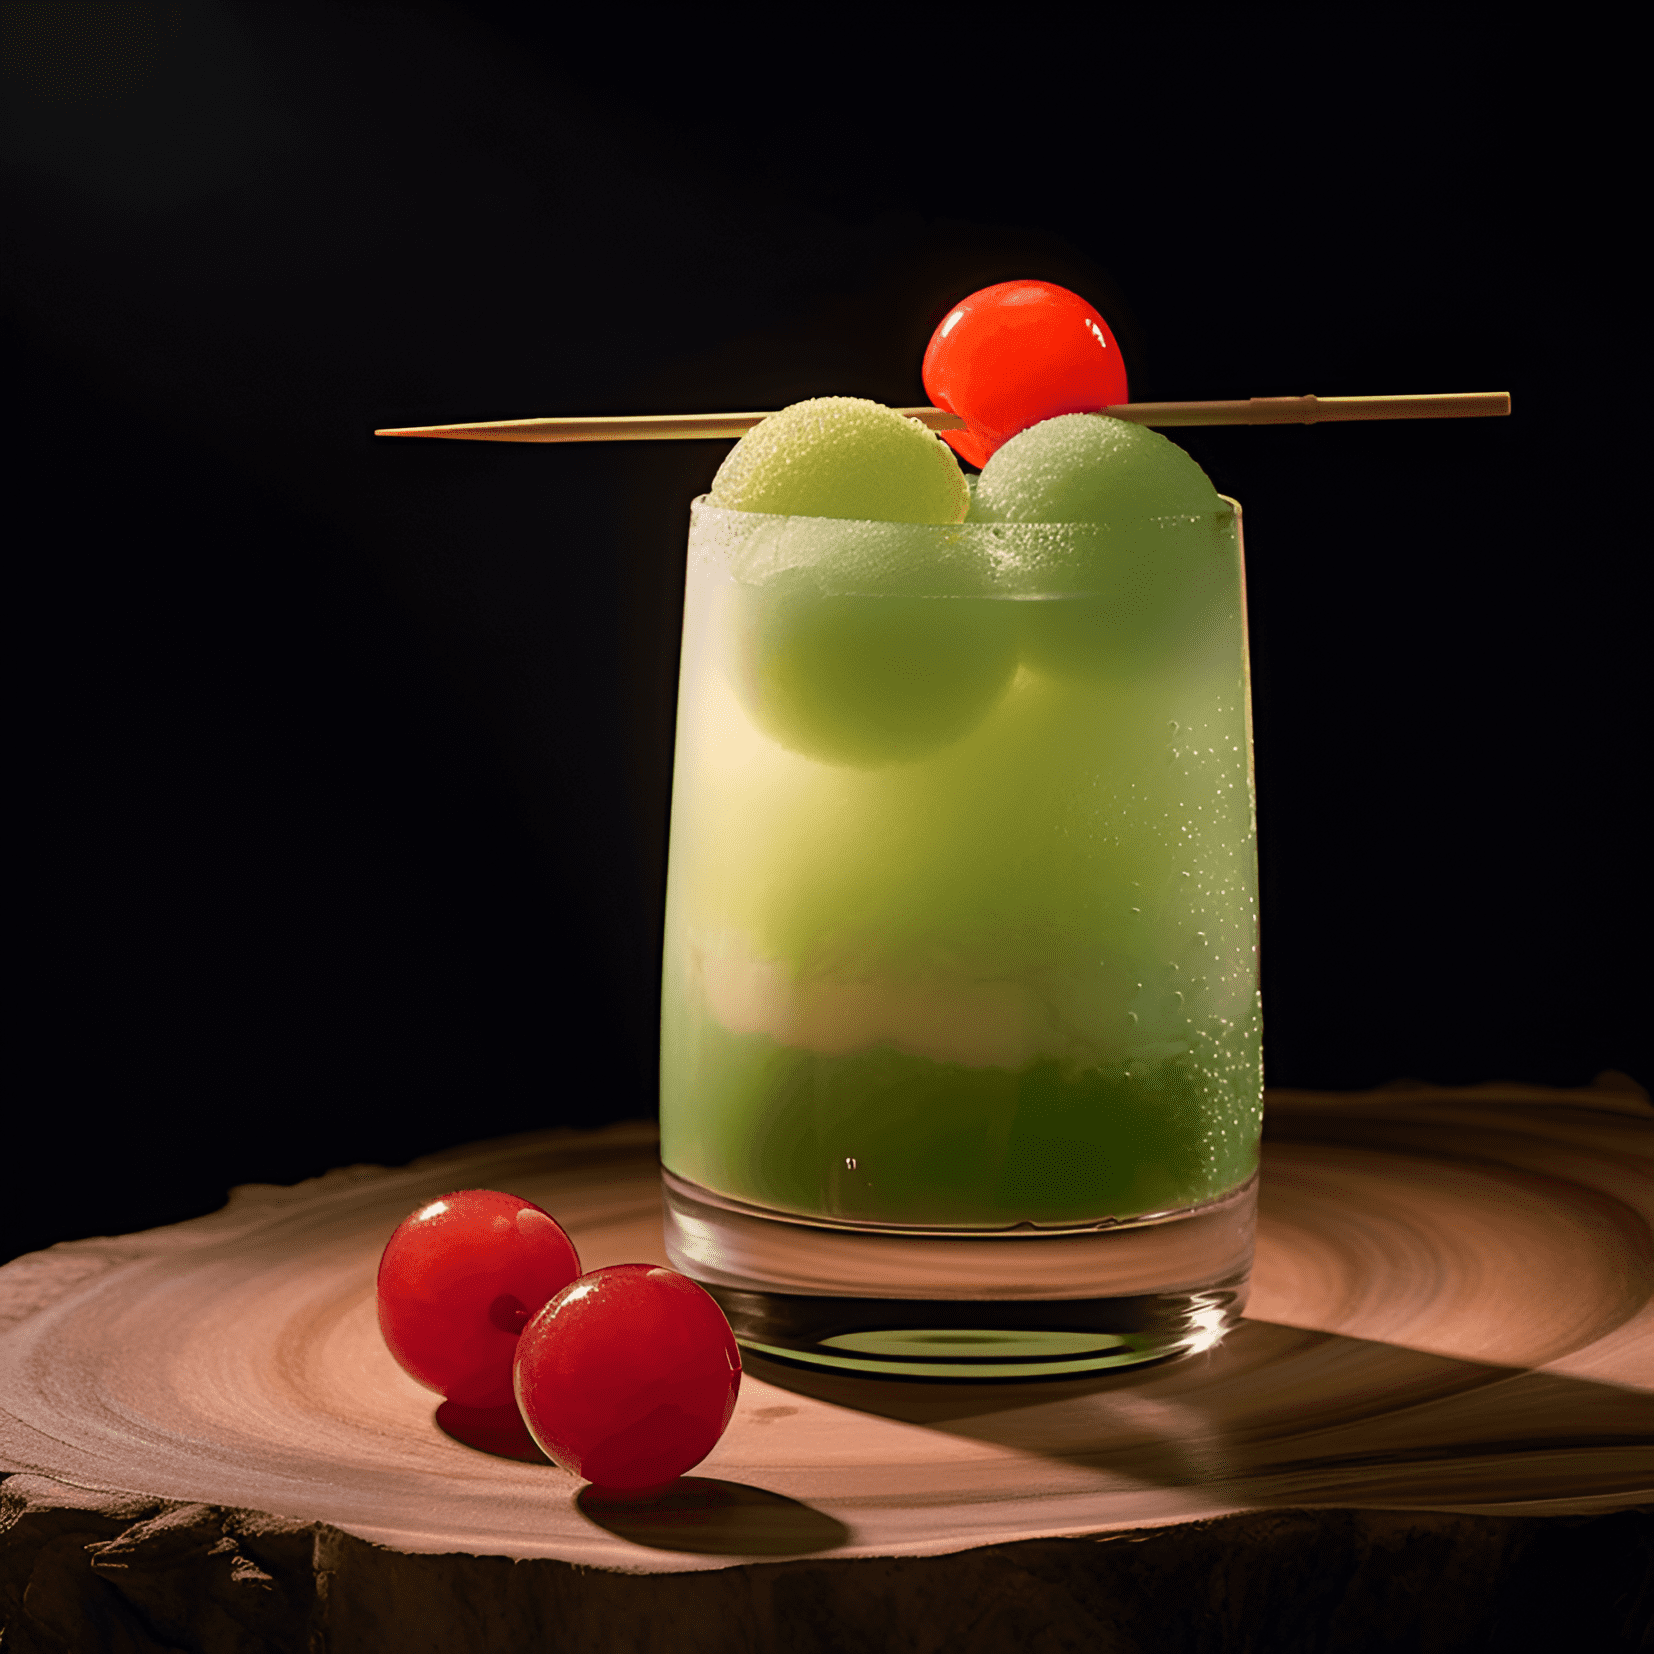 Midori Cocktails: Make Green-Melon Cocktails